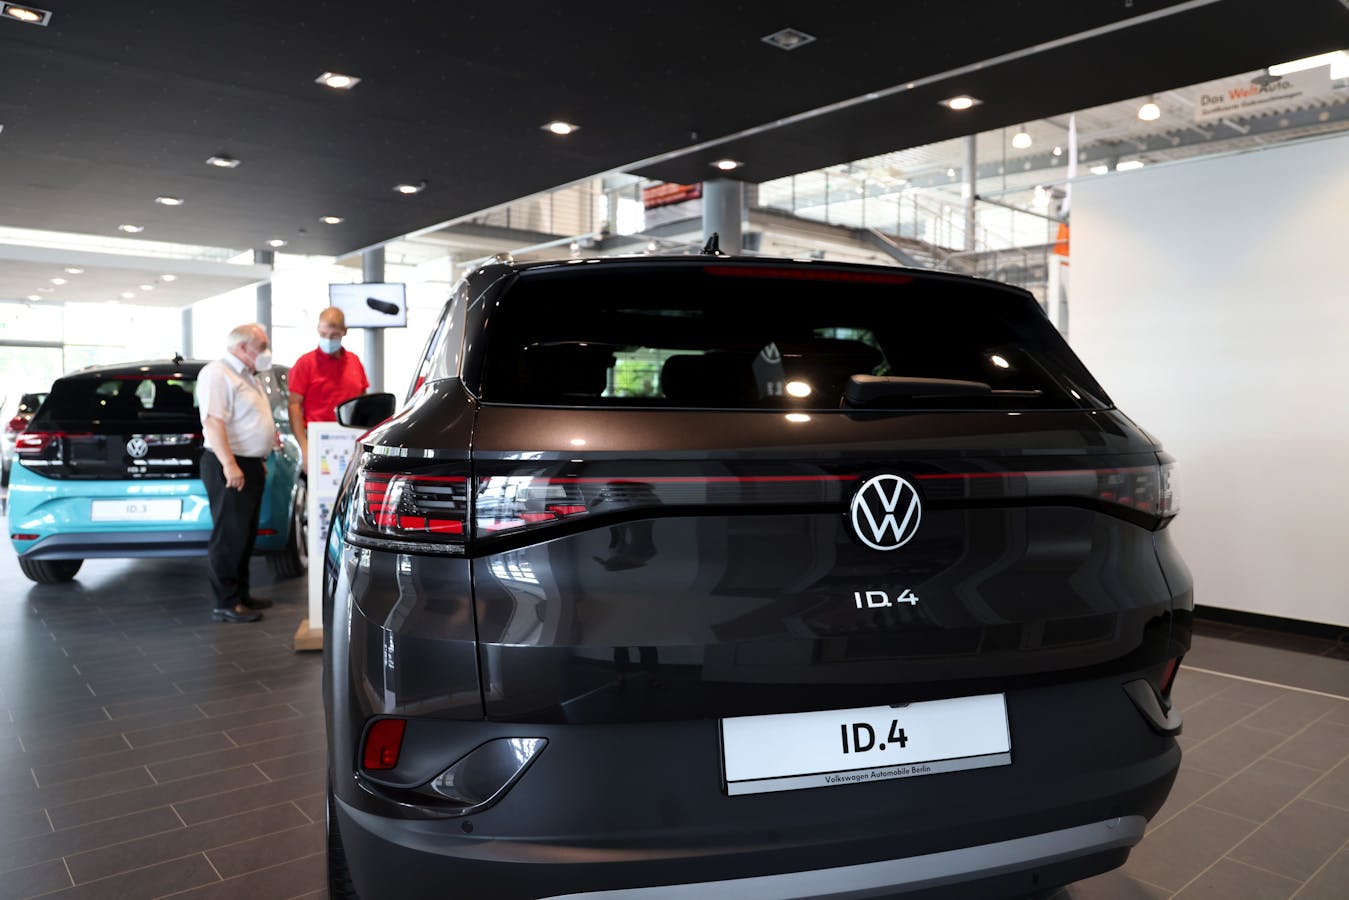 VW is aiming the ID.4 at mainstream consumers. Photo: Liesa Johannssen-Koppitz/Bloomberg